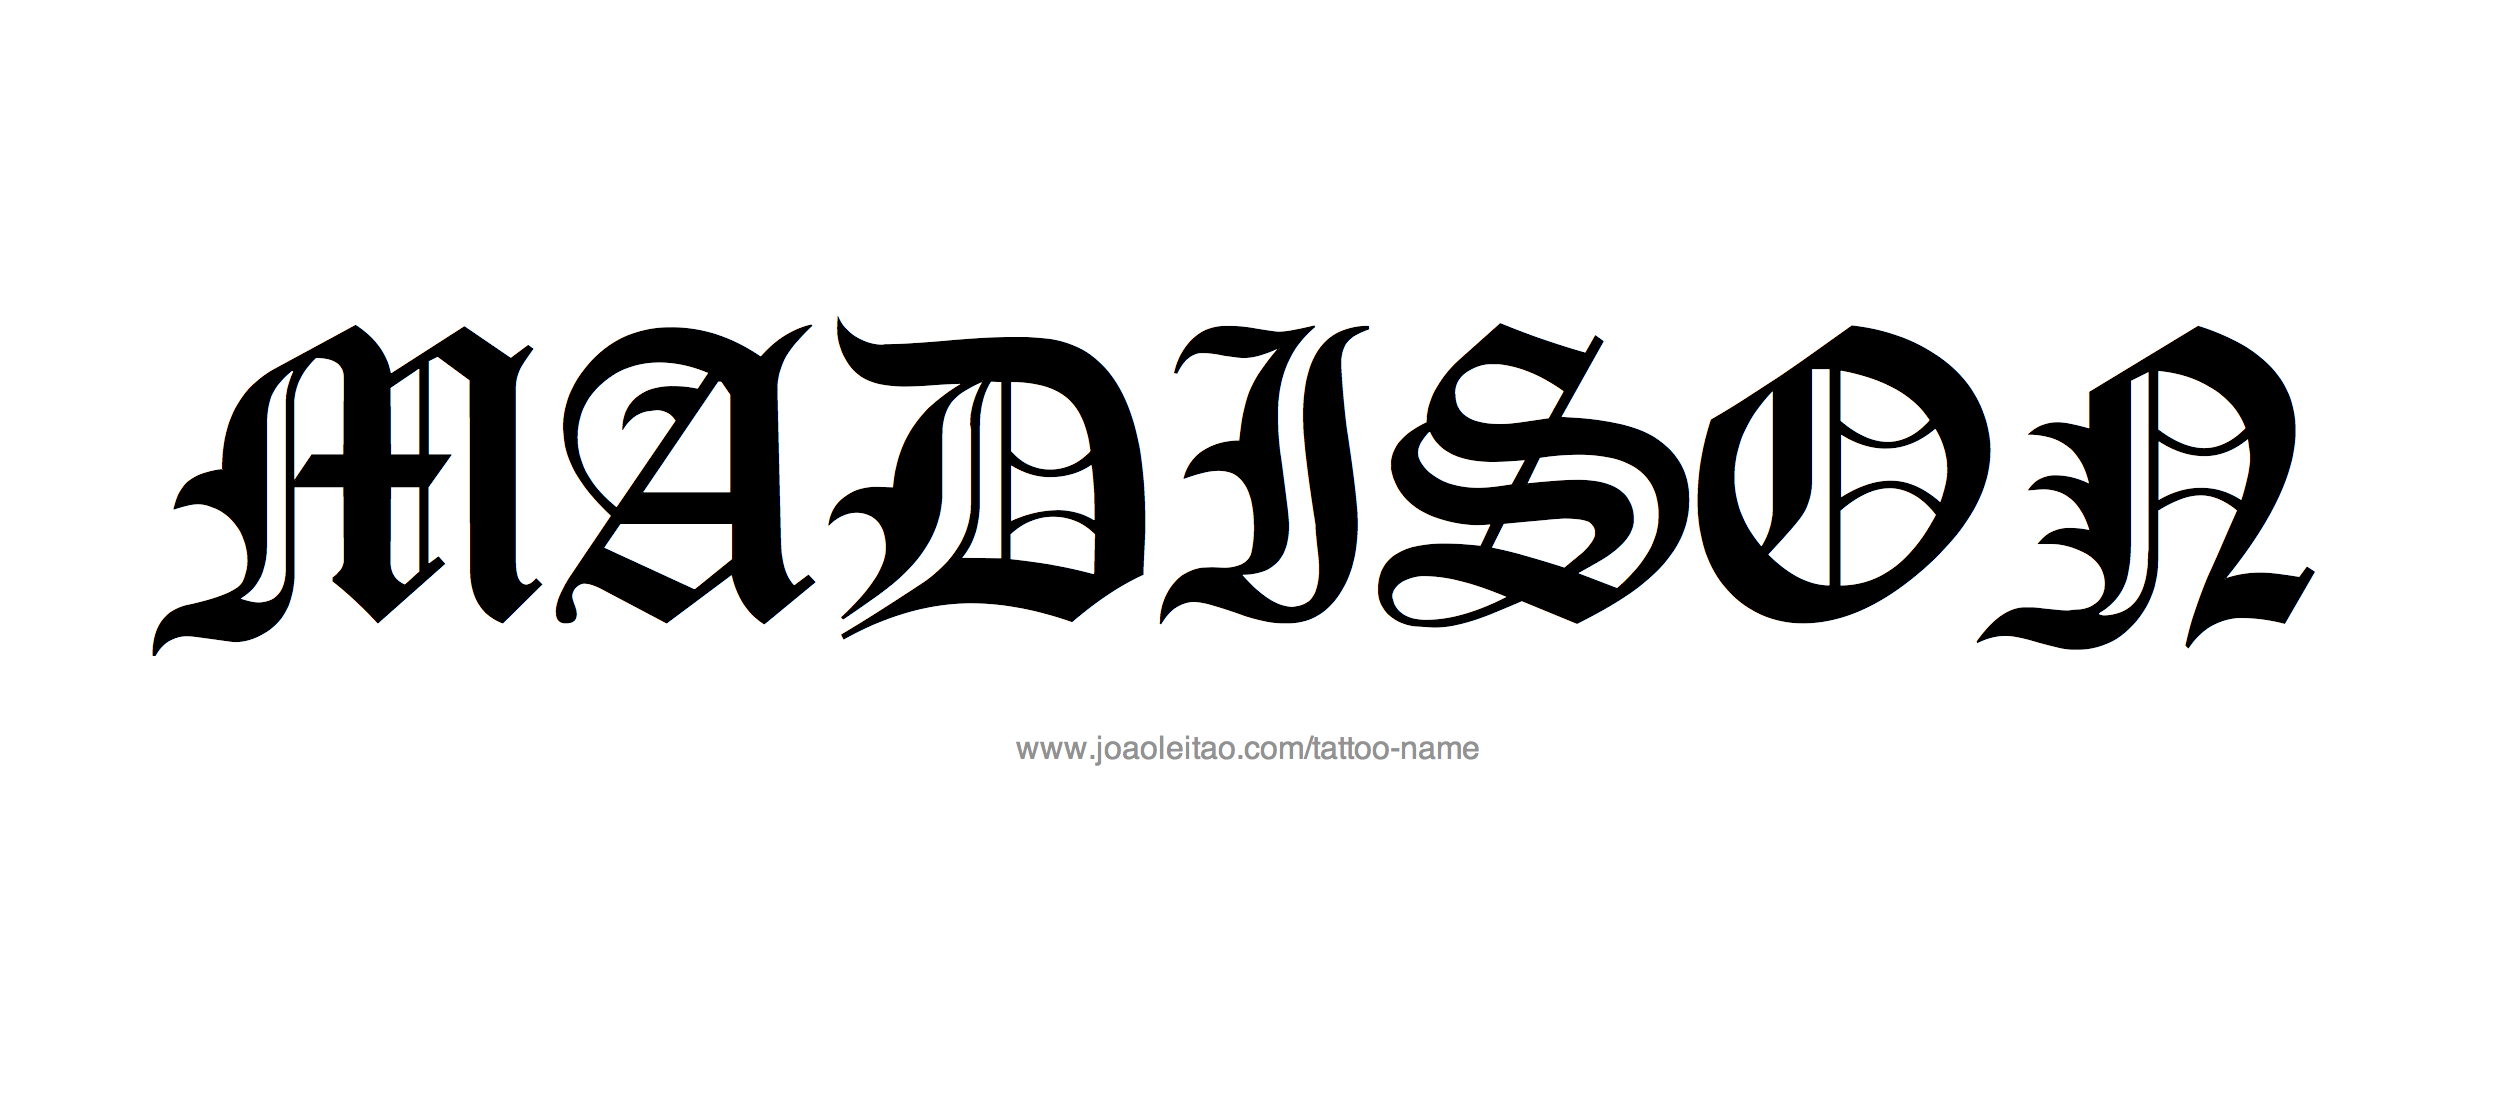 Tattoo Design Name Madison 